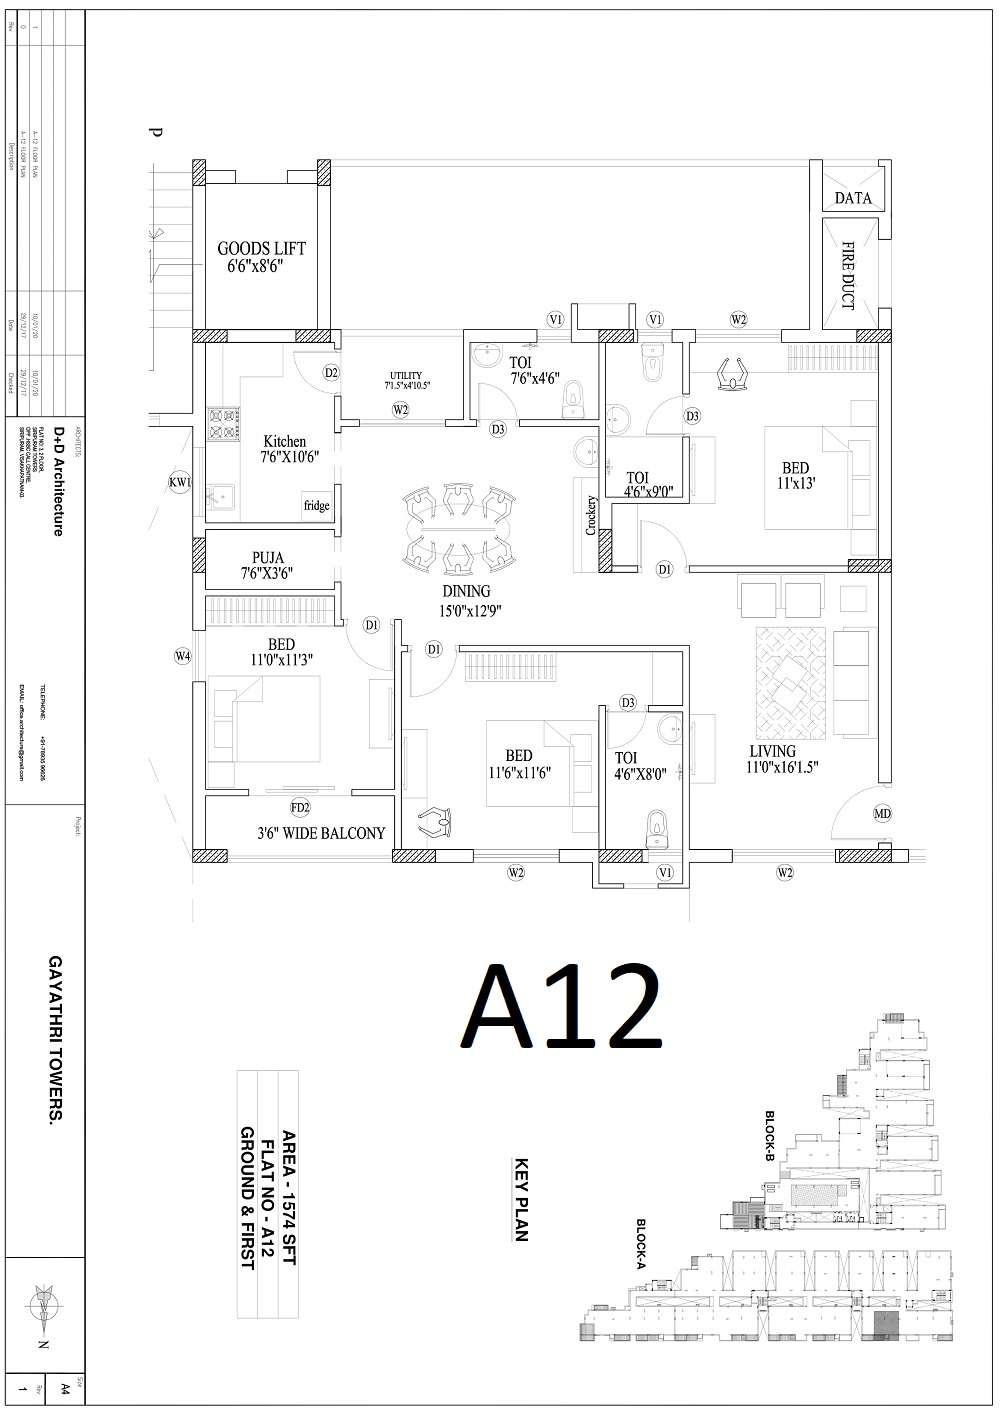 A12 - Floor Plan